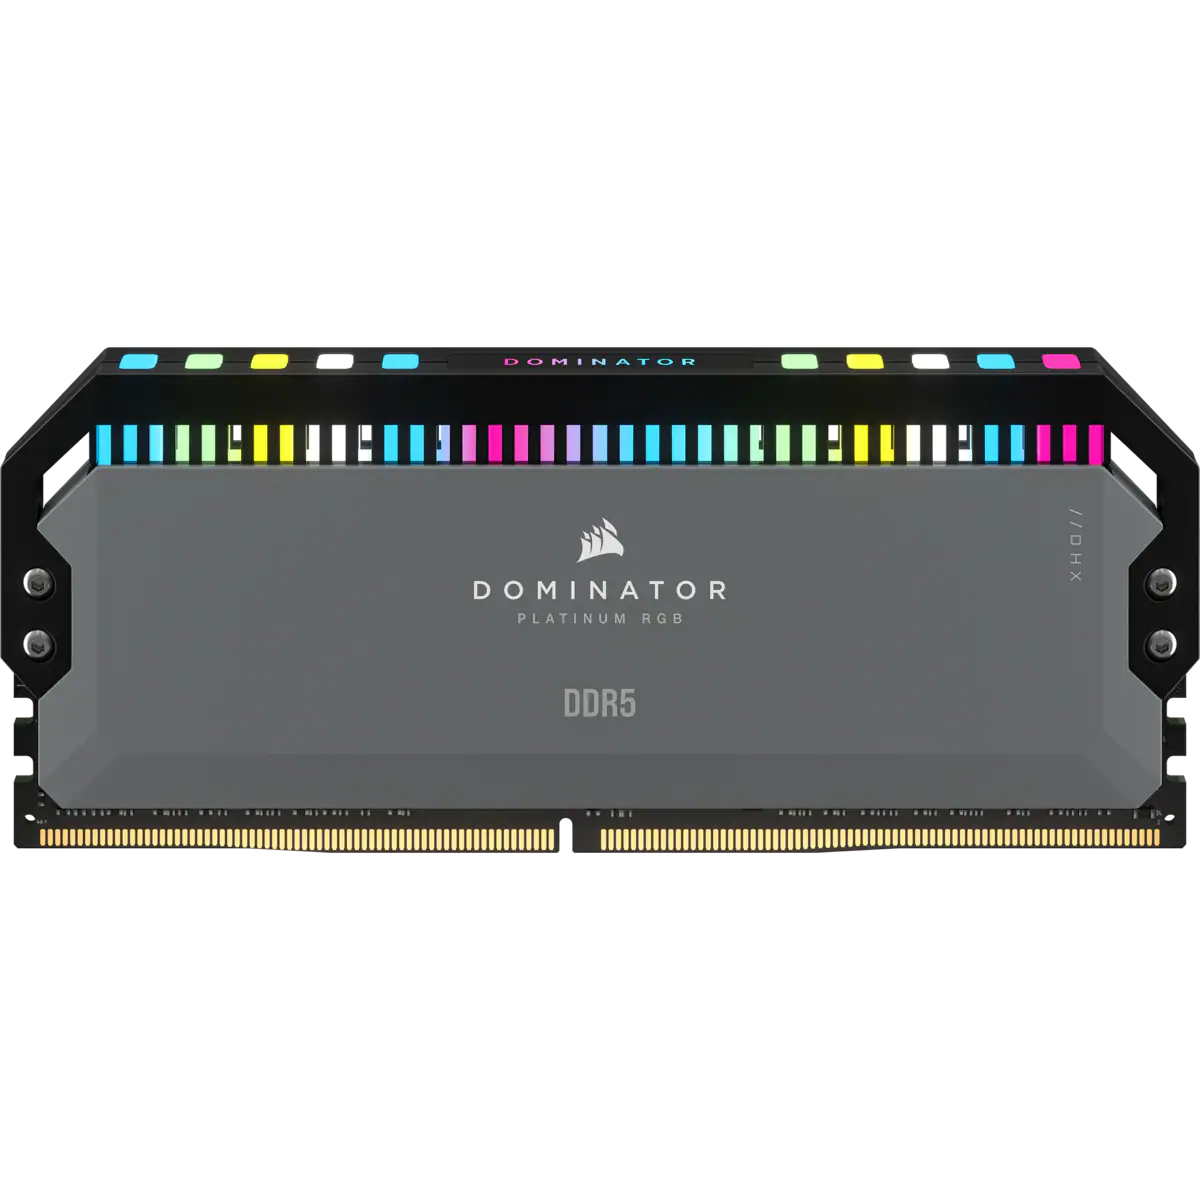 CORSAIR DOMINATOR PLATINUM RGB 32GB (2x16GB)DDR5 DRAM 5600MT/s C36 RAM